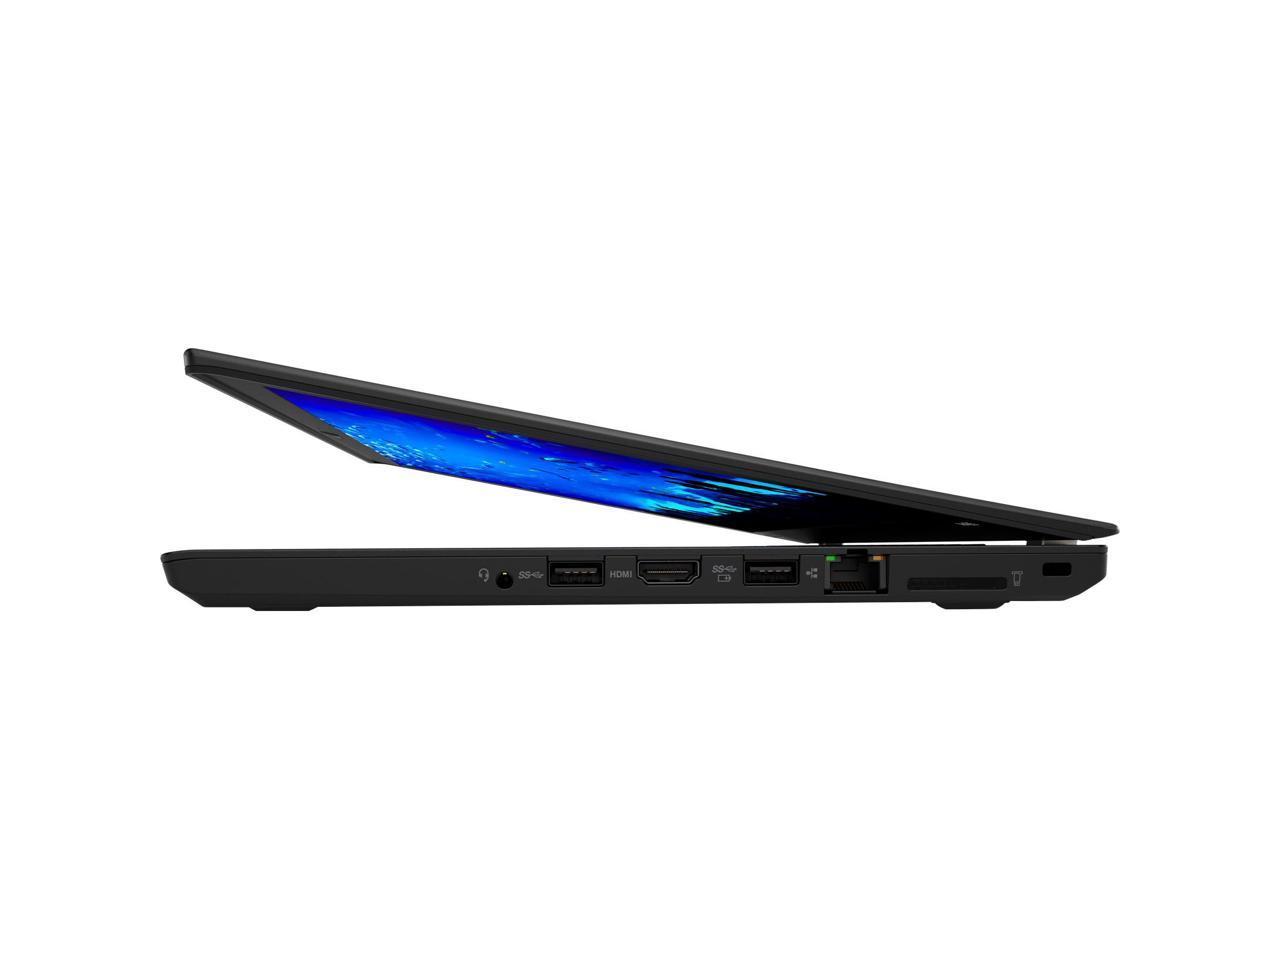 Lenovo ThinkPad A485 20MU000QUS 14" LCD Notebook - AMD Ryzen 3 2300U Quad-core (4 Core) 2 GHz - 4 GB DDR4 SDRAM - 500 GB HDD - Windows 10 Pro 64-bit (English) - 1366 x 768 - Twisted nematic (TN) - Bla